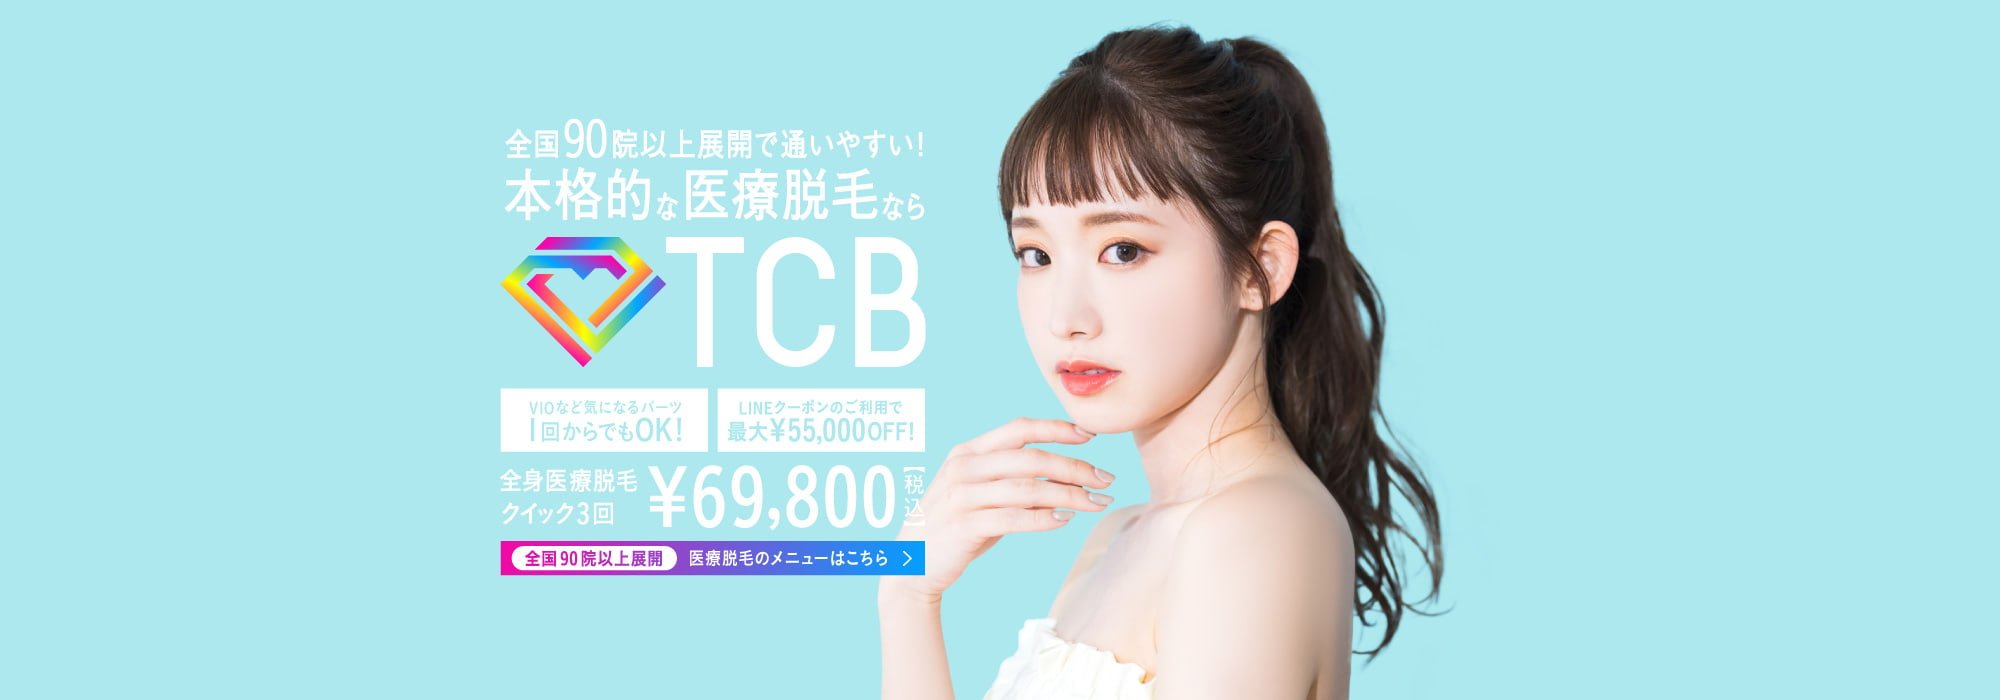 TCB東京中央美容外科のスクショ